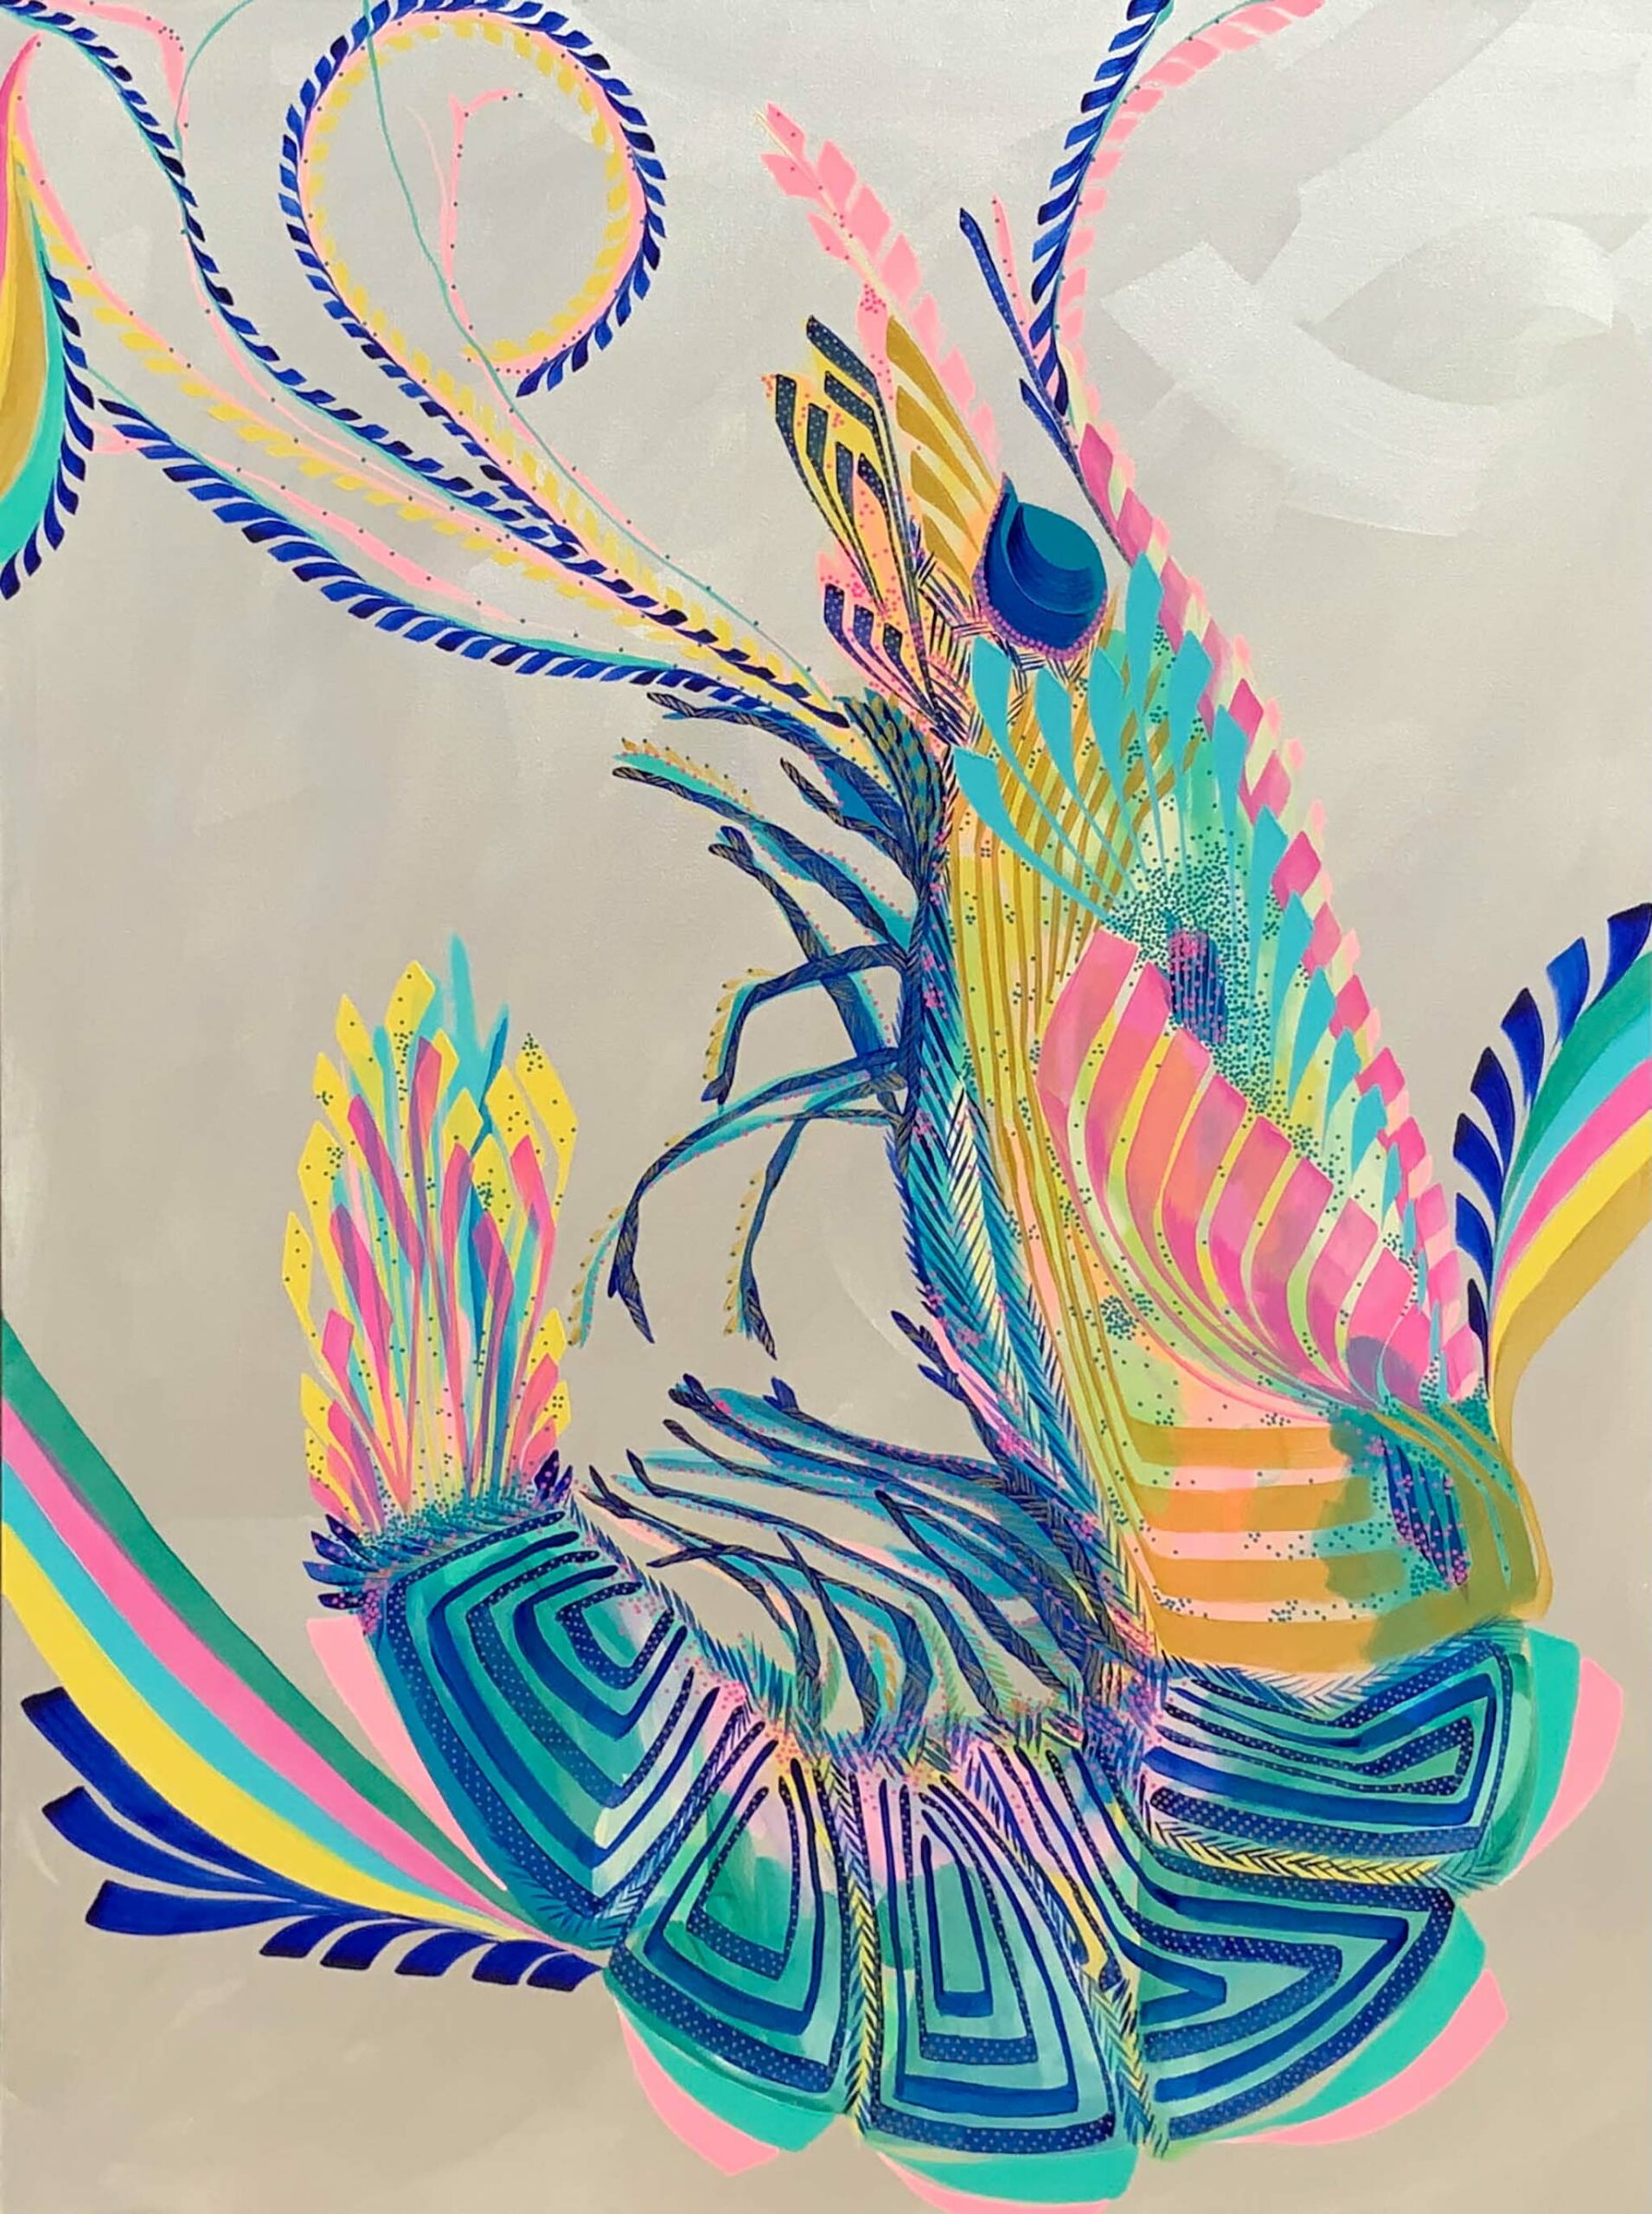 Stylized, colorful, graphic interpretation of a shrimp.